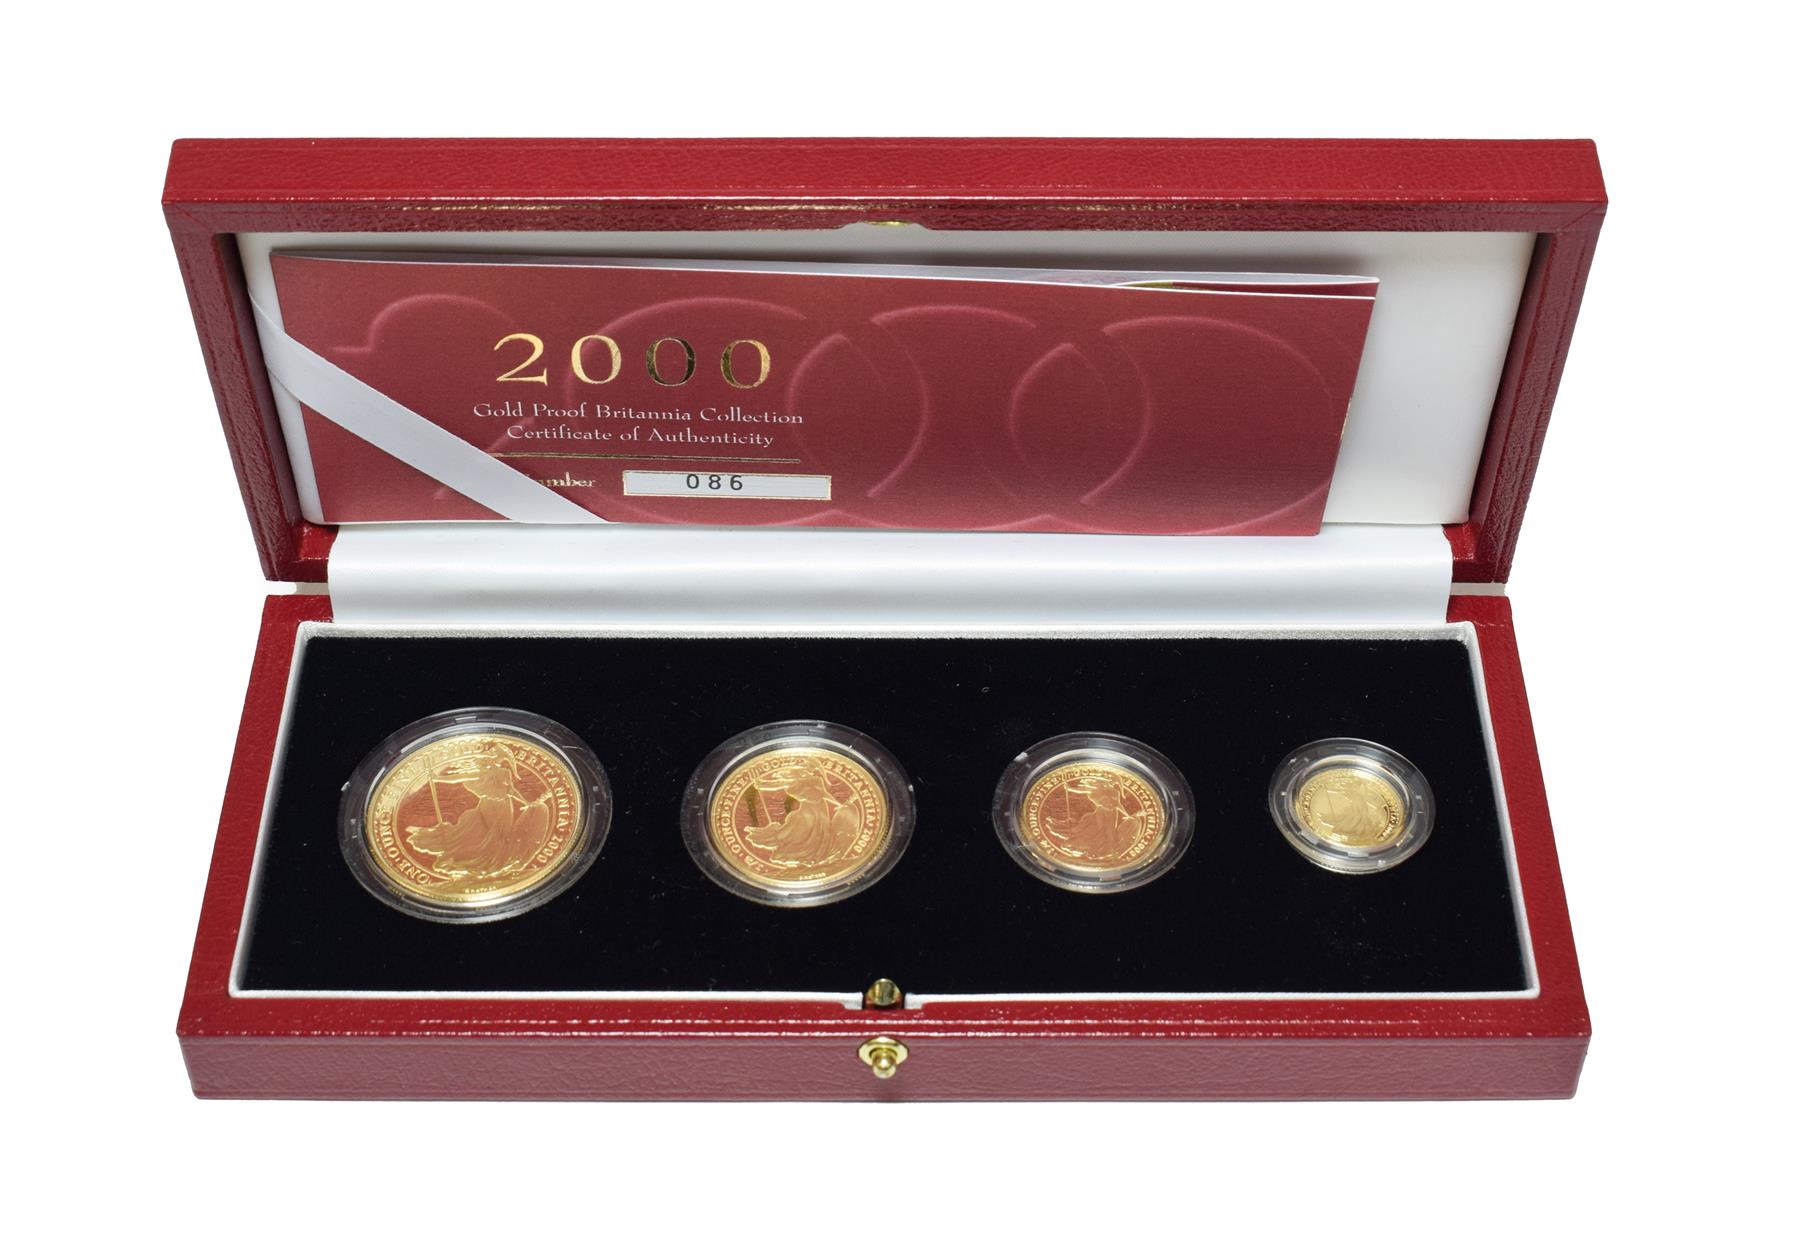 Elizabeth II, 4-Coin Gold Proof Britannia Collection 2000 comprising: £100 (1oz fine gold), £50 (1/2